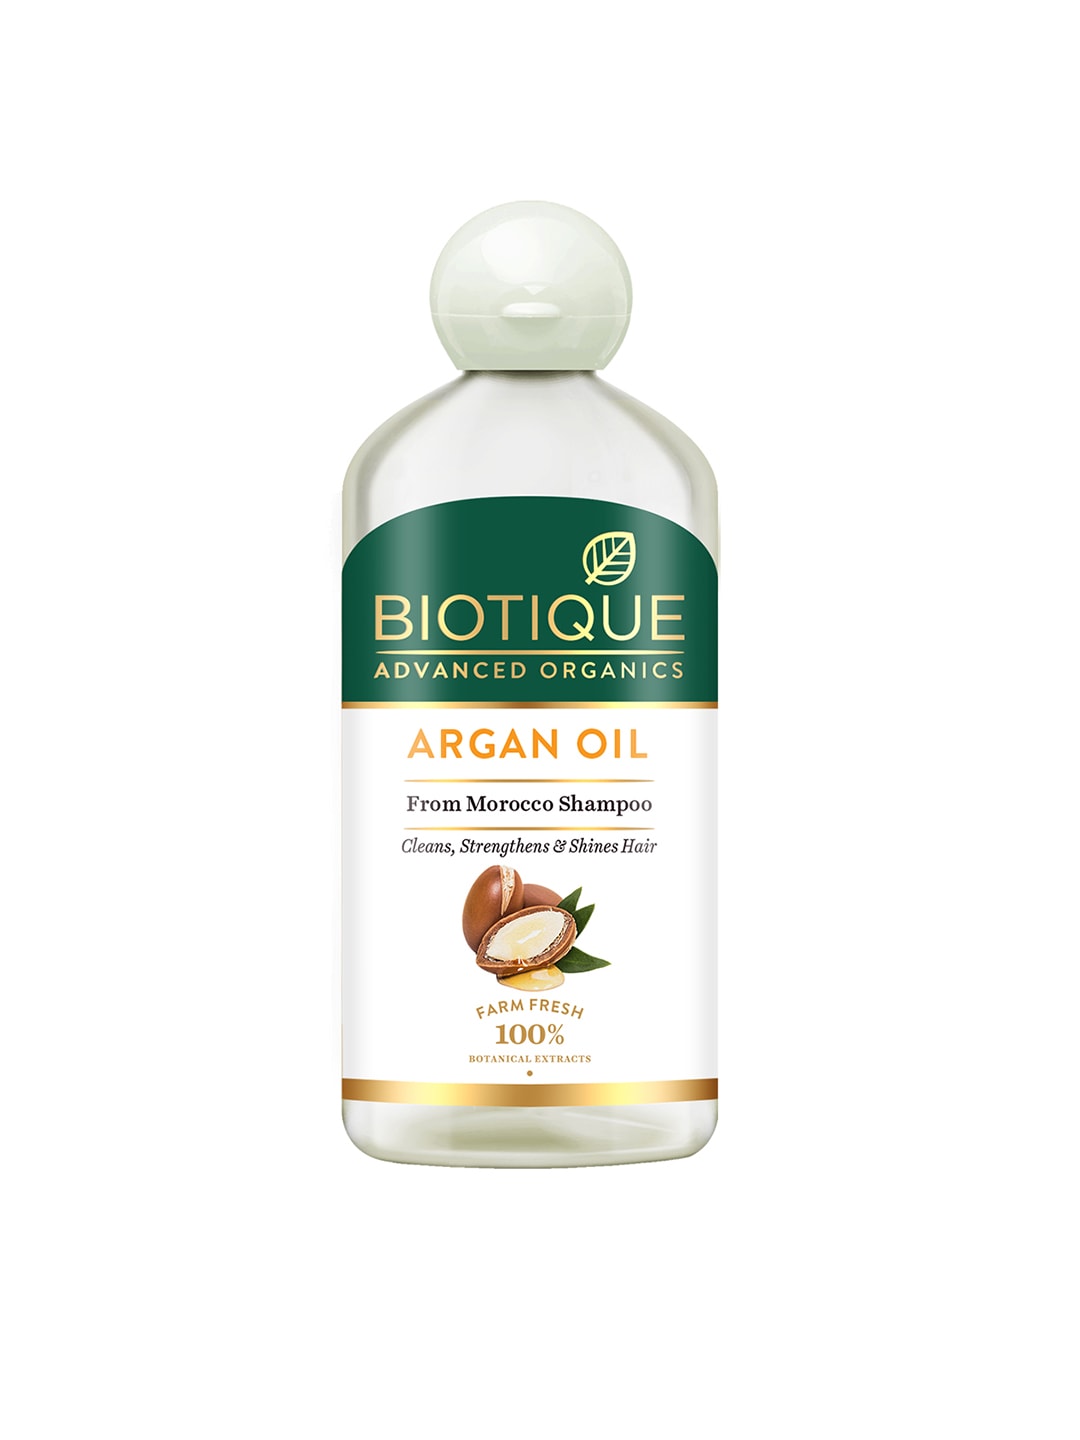 Biotique Unisex Advanced Organics Argan Oil From Morocco Shampoo 300 ml Price in India